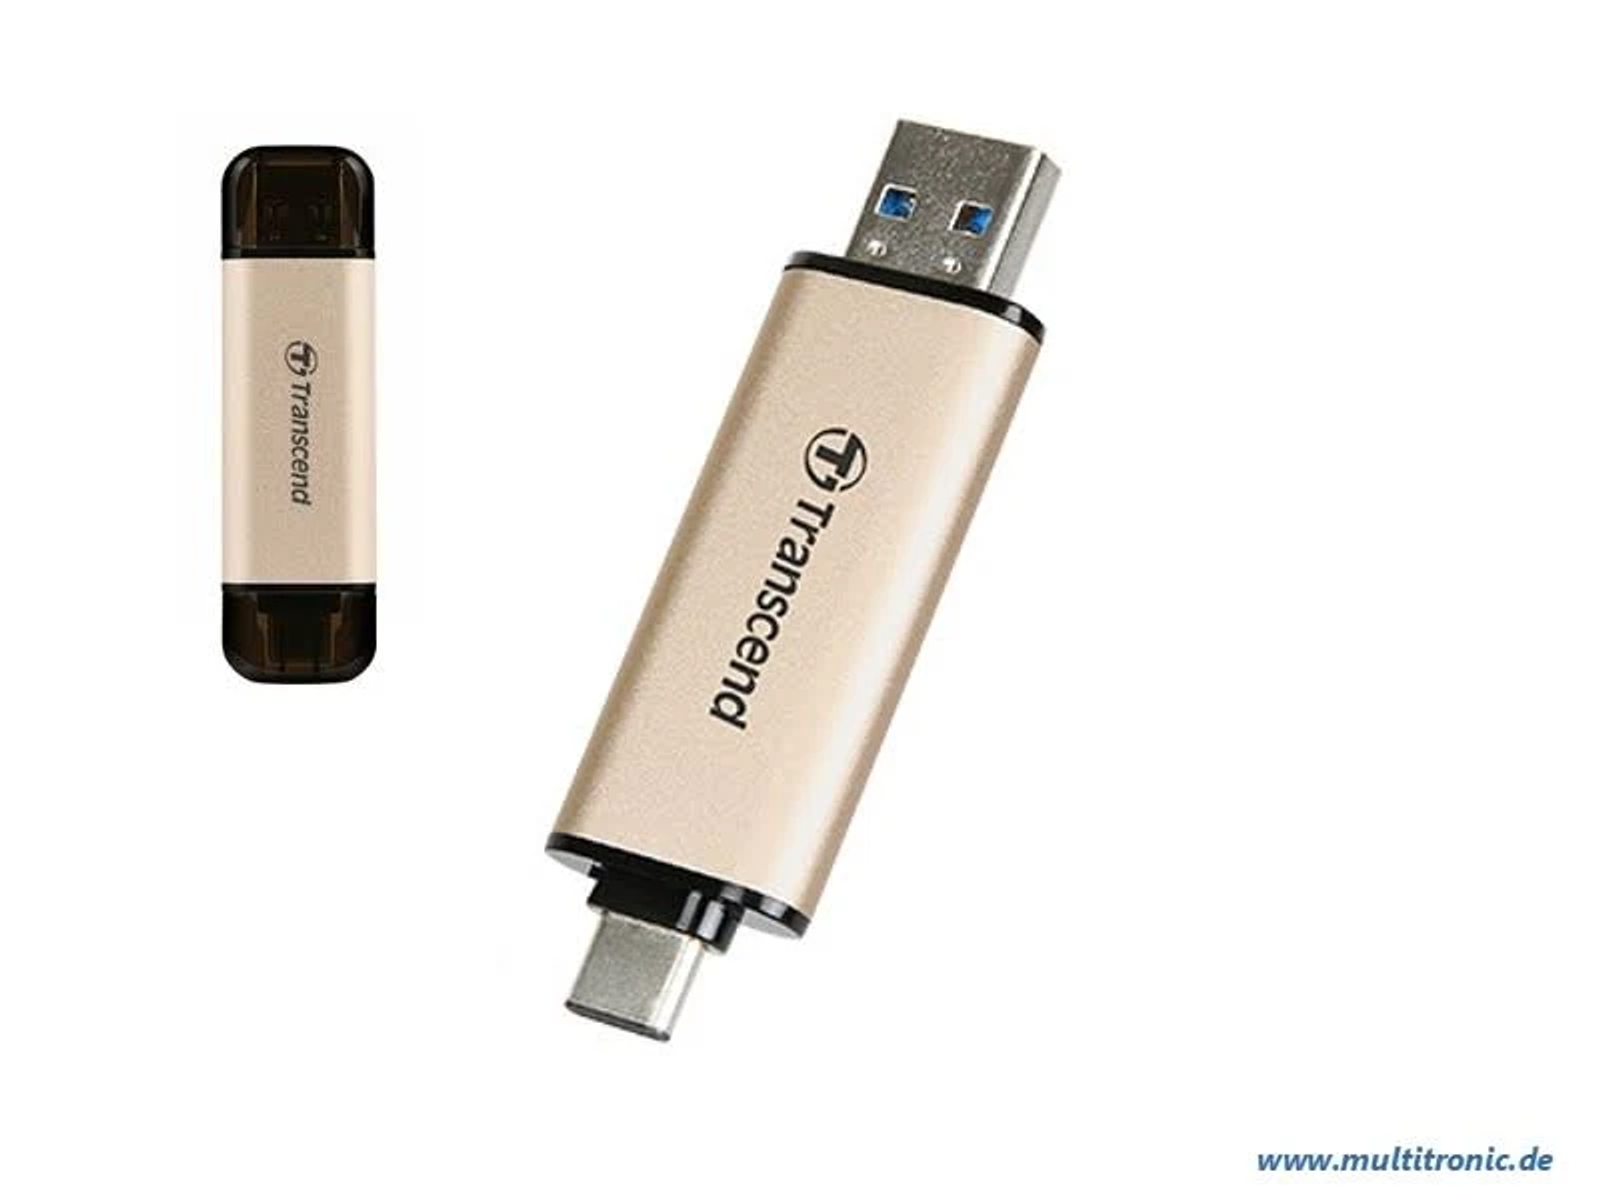 TRANSCEND TS512GJF930C USB-Flash-Laufwerk (Schwarz, 512 GB)